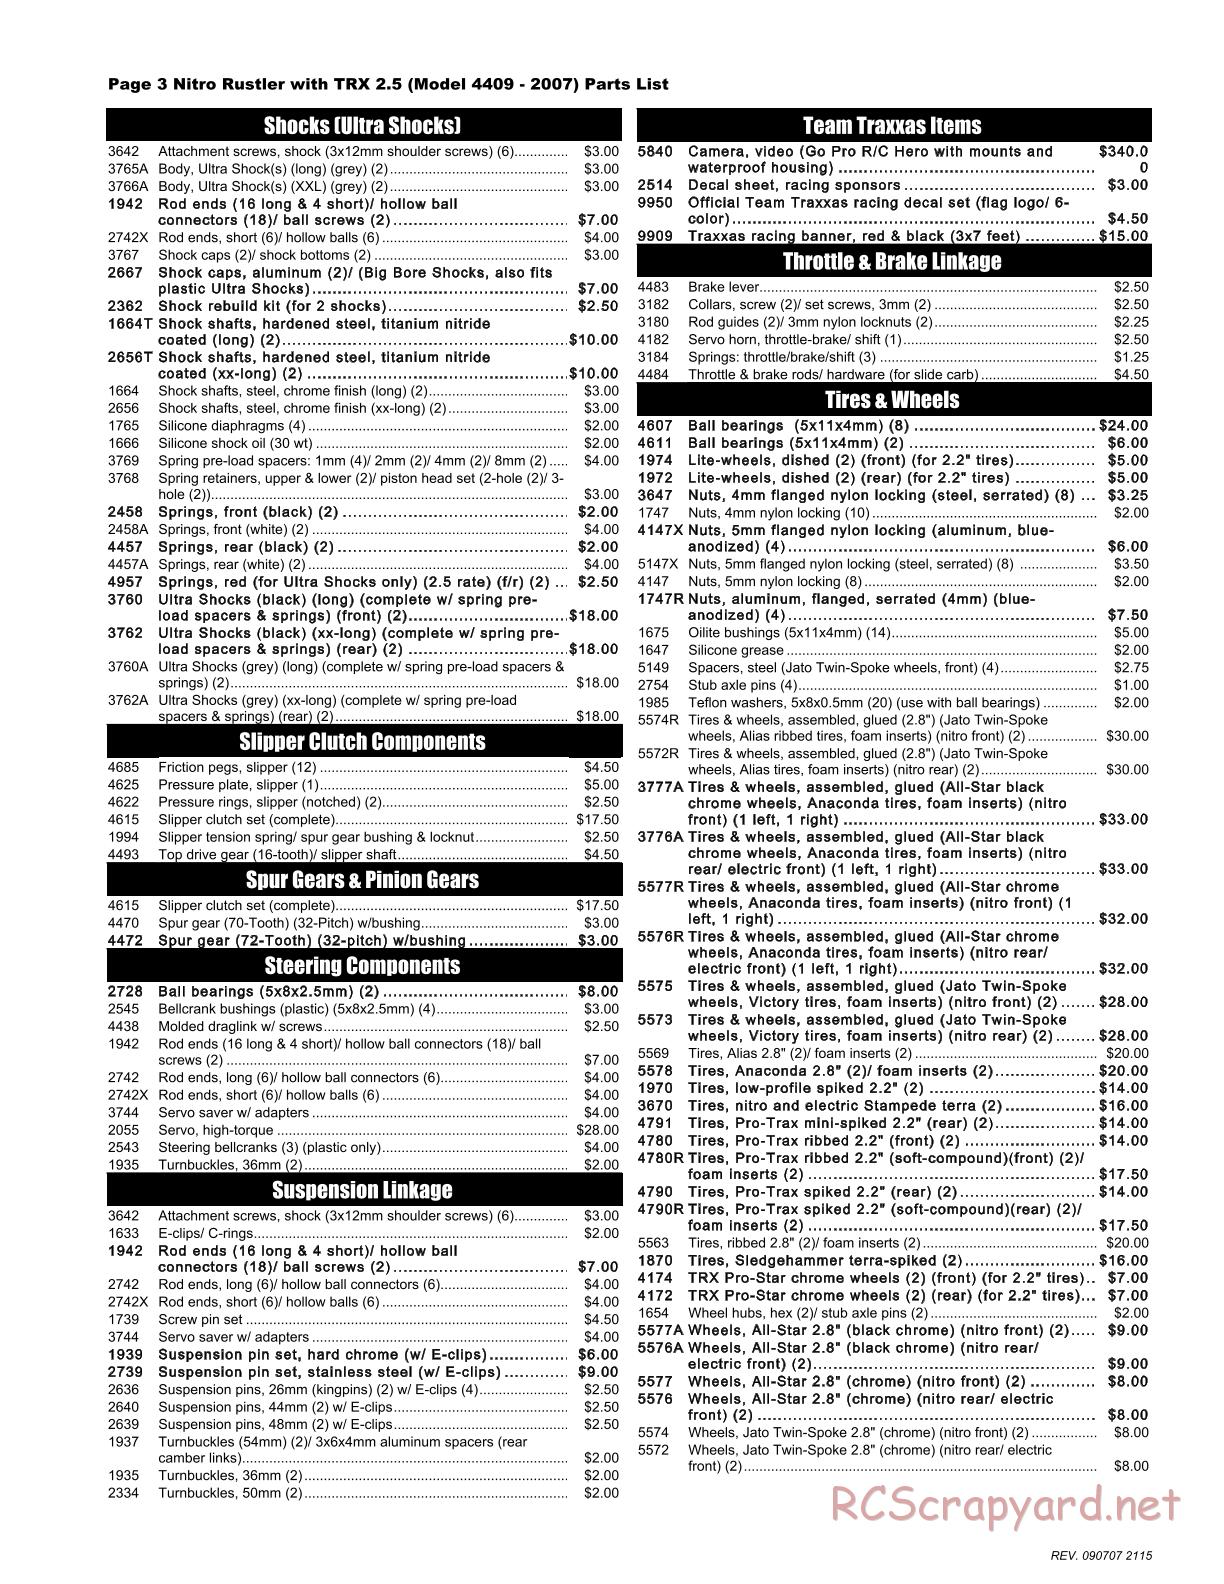 Traxxas - Nitro Rustler (2012) - Parts List - Page 3